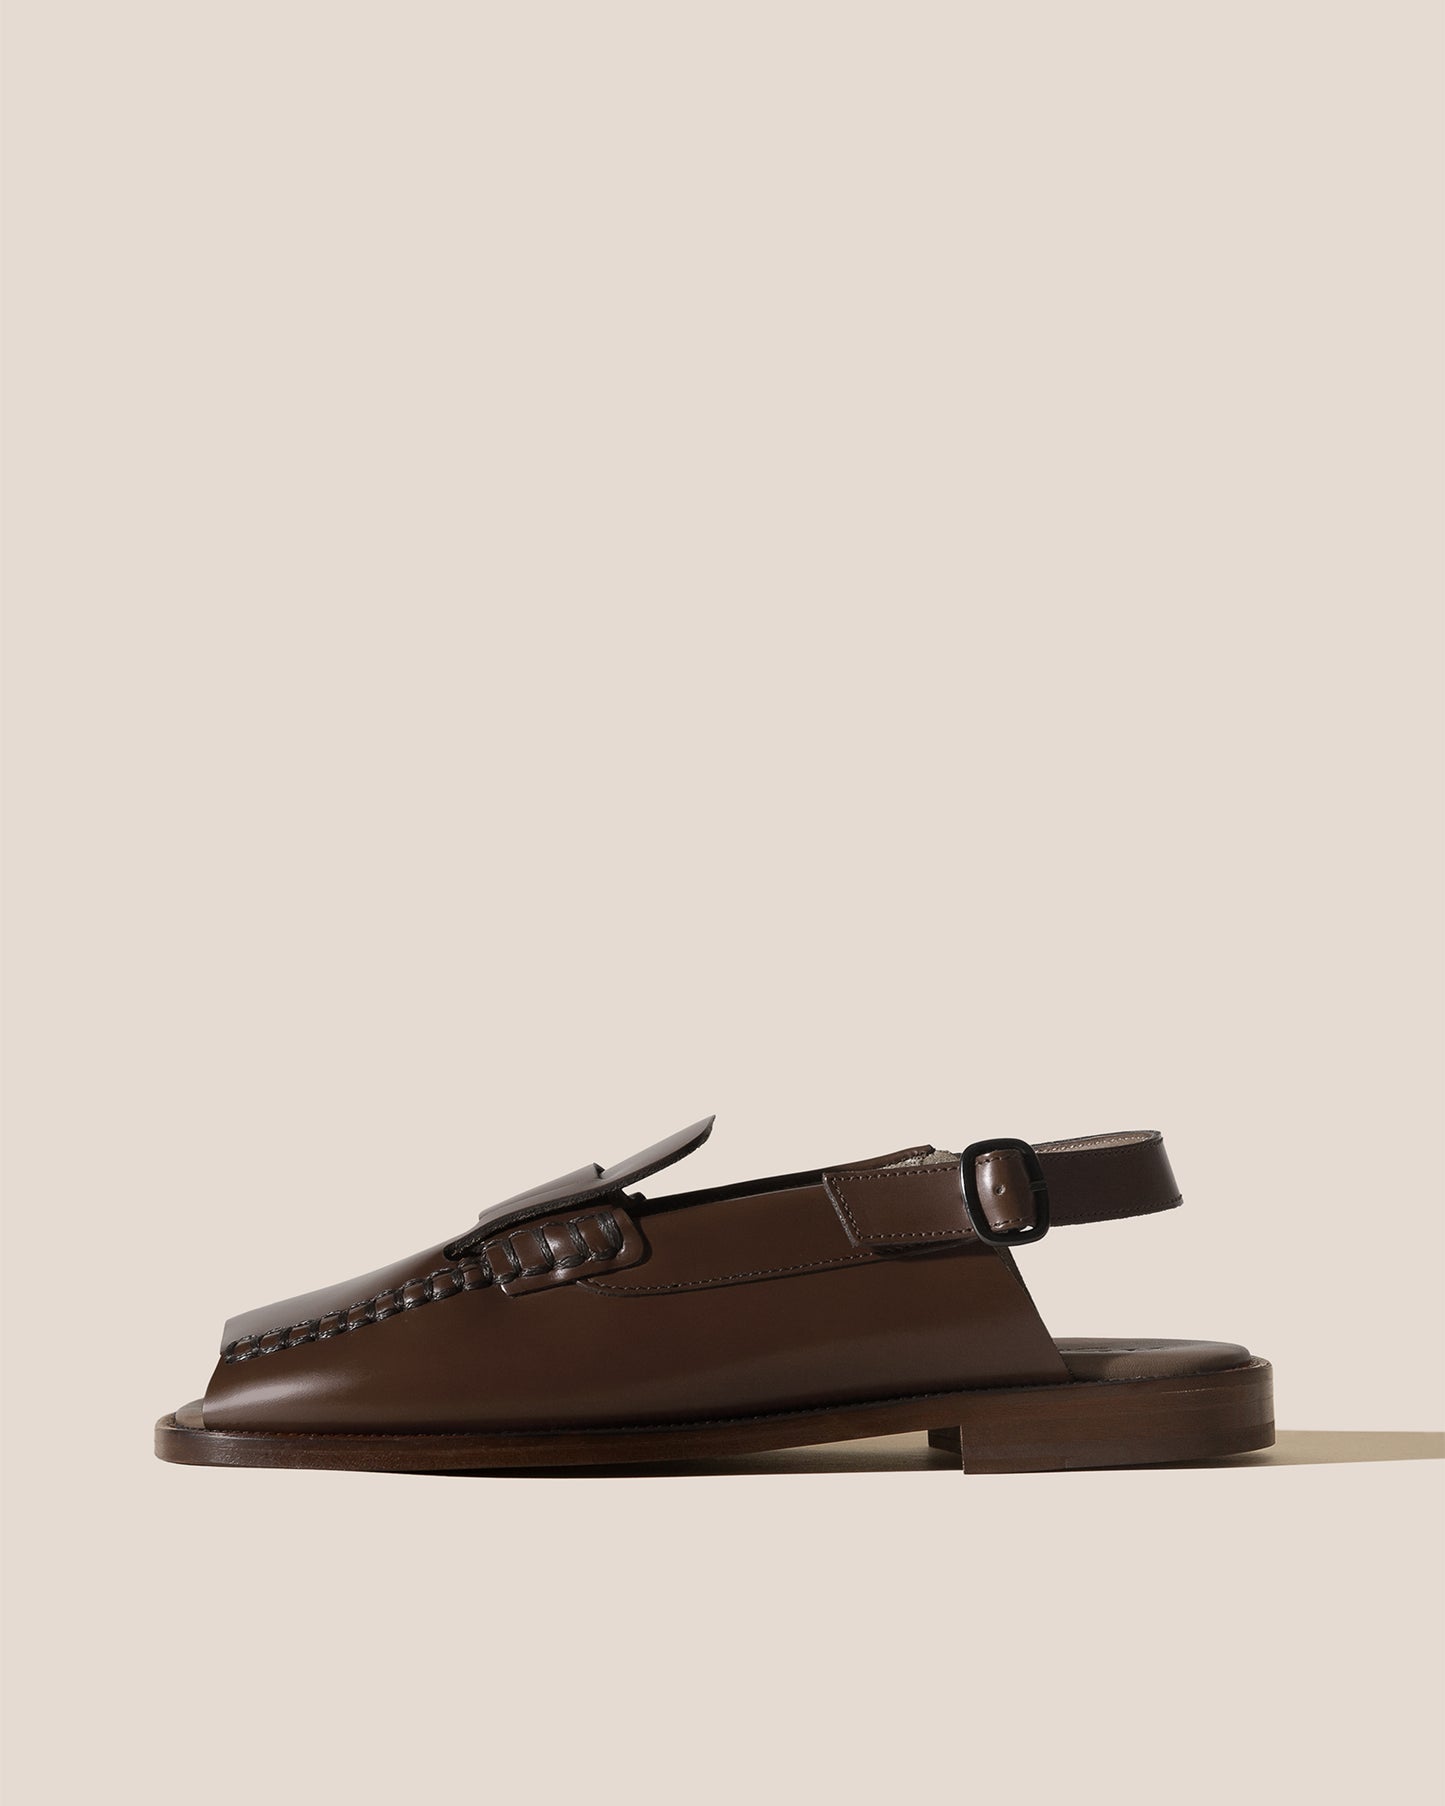 SINEU SANDAL - Open-toe Slingback Loafer